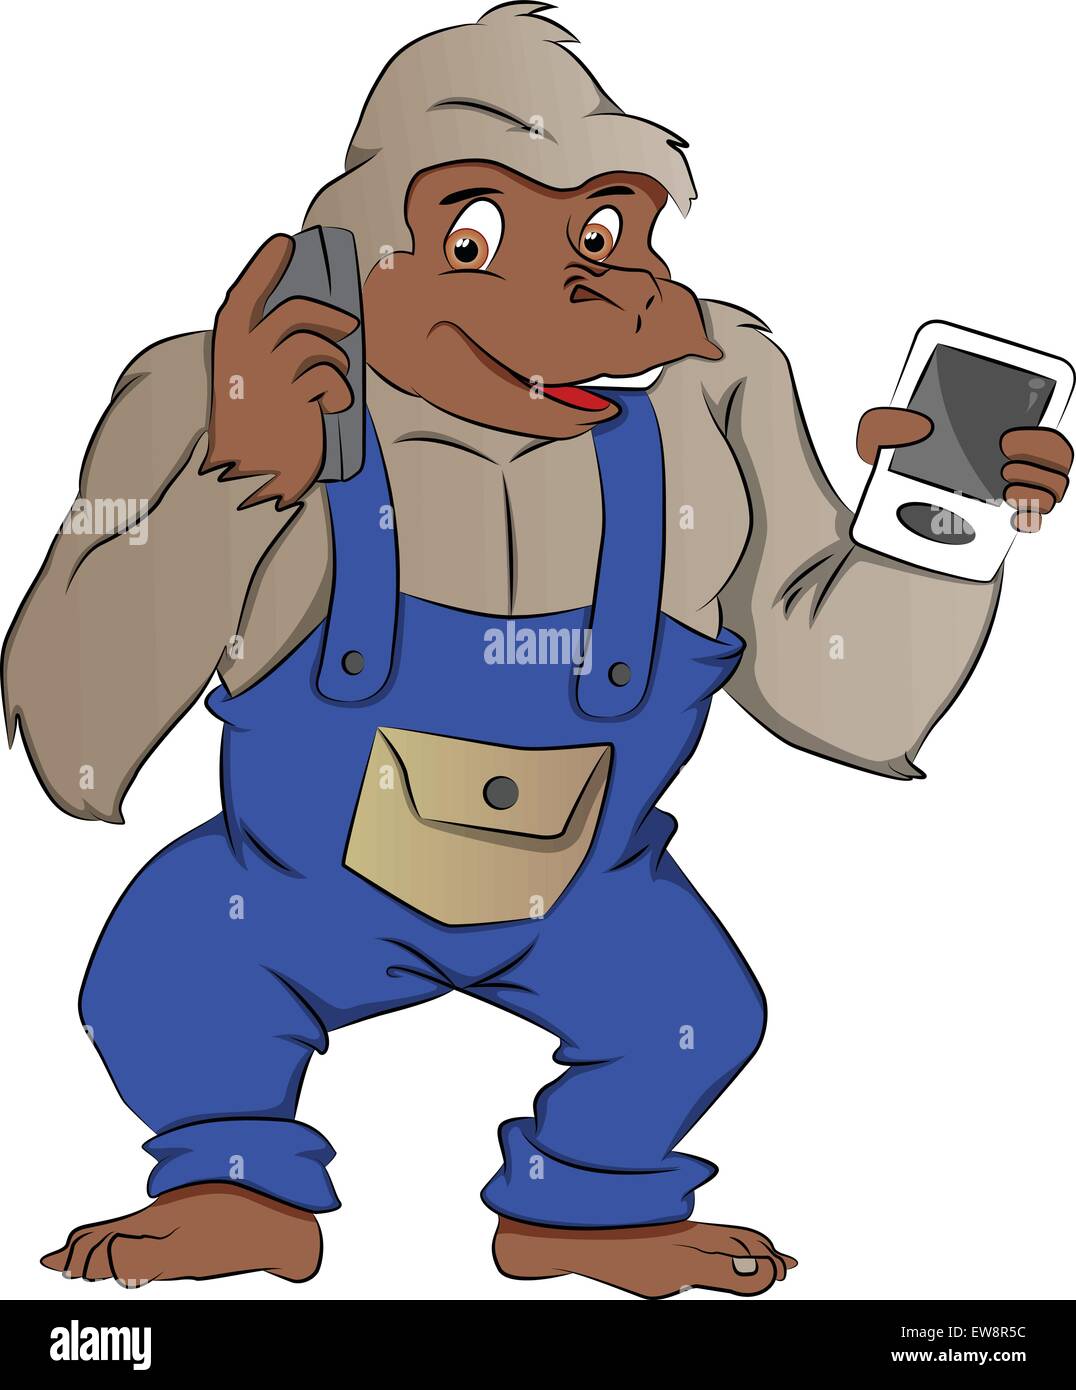 https://c8.alamy.com/comp/EW8R5C/gorilla-with-gadgets-using-a-mobile-phone-vector-illustration-EW8R5C.jpg